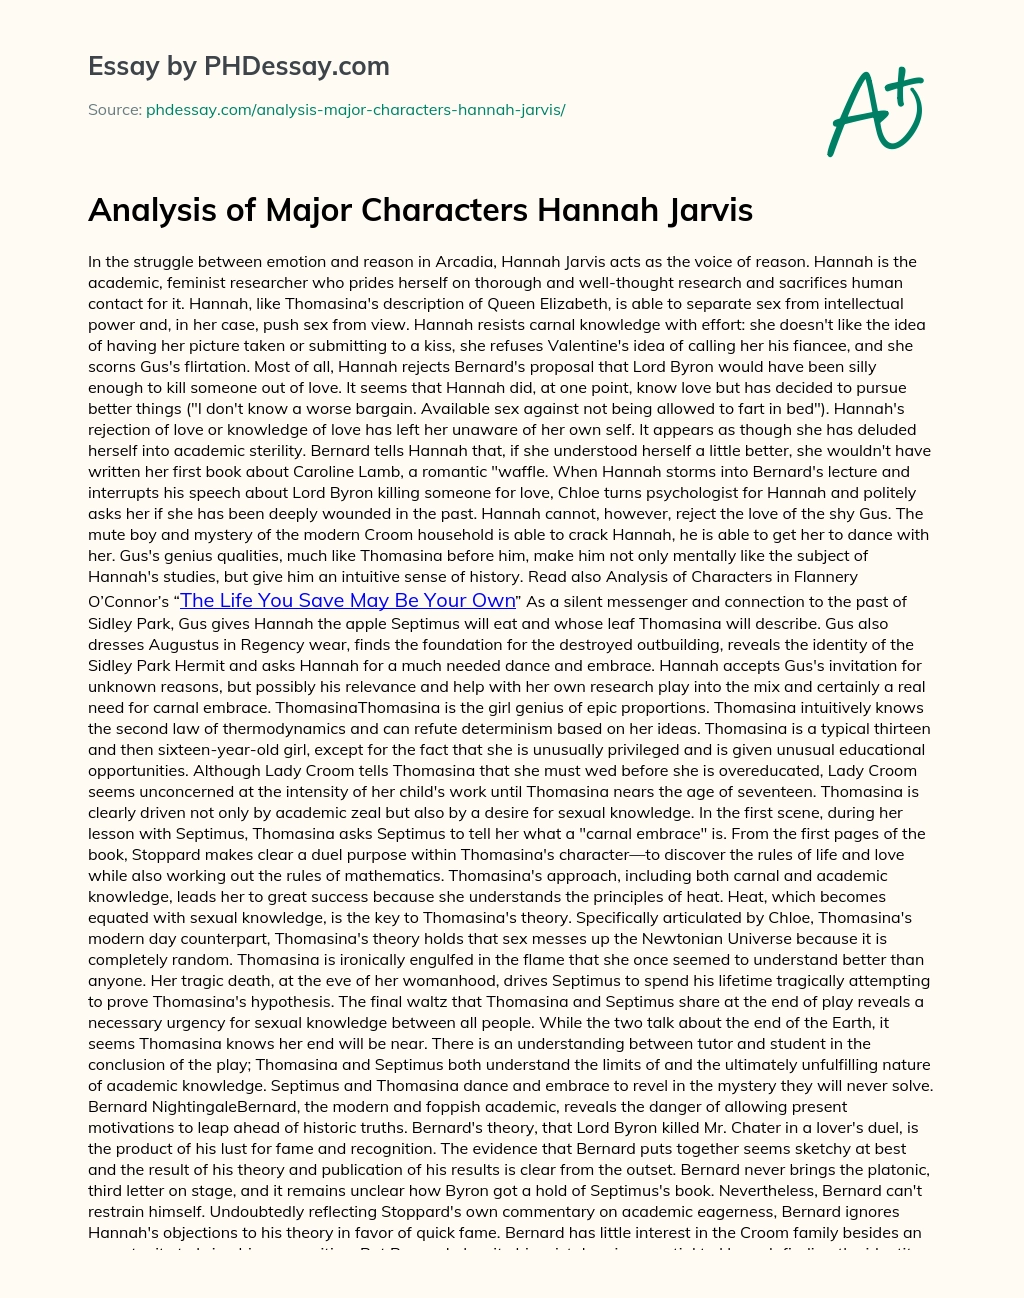 Analysis of Major Characters Hannah Jarvis essay